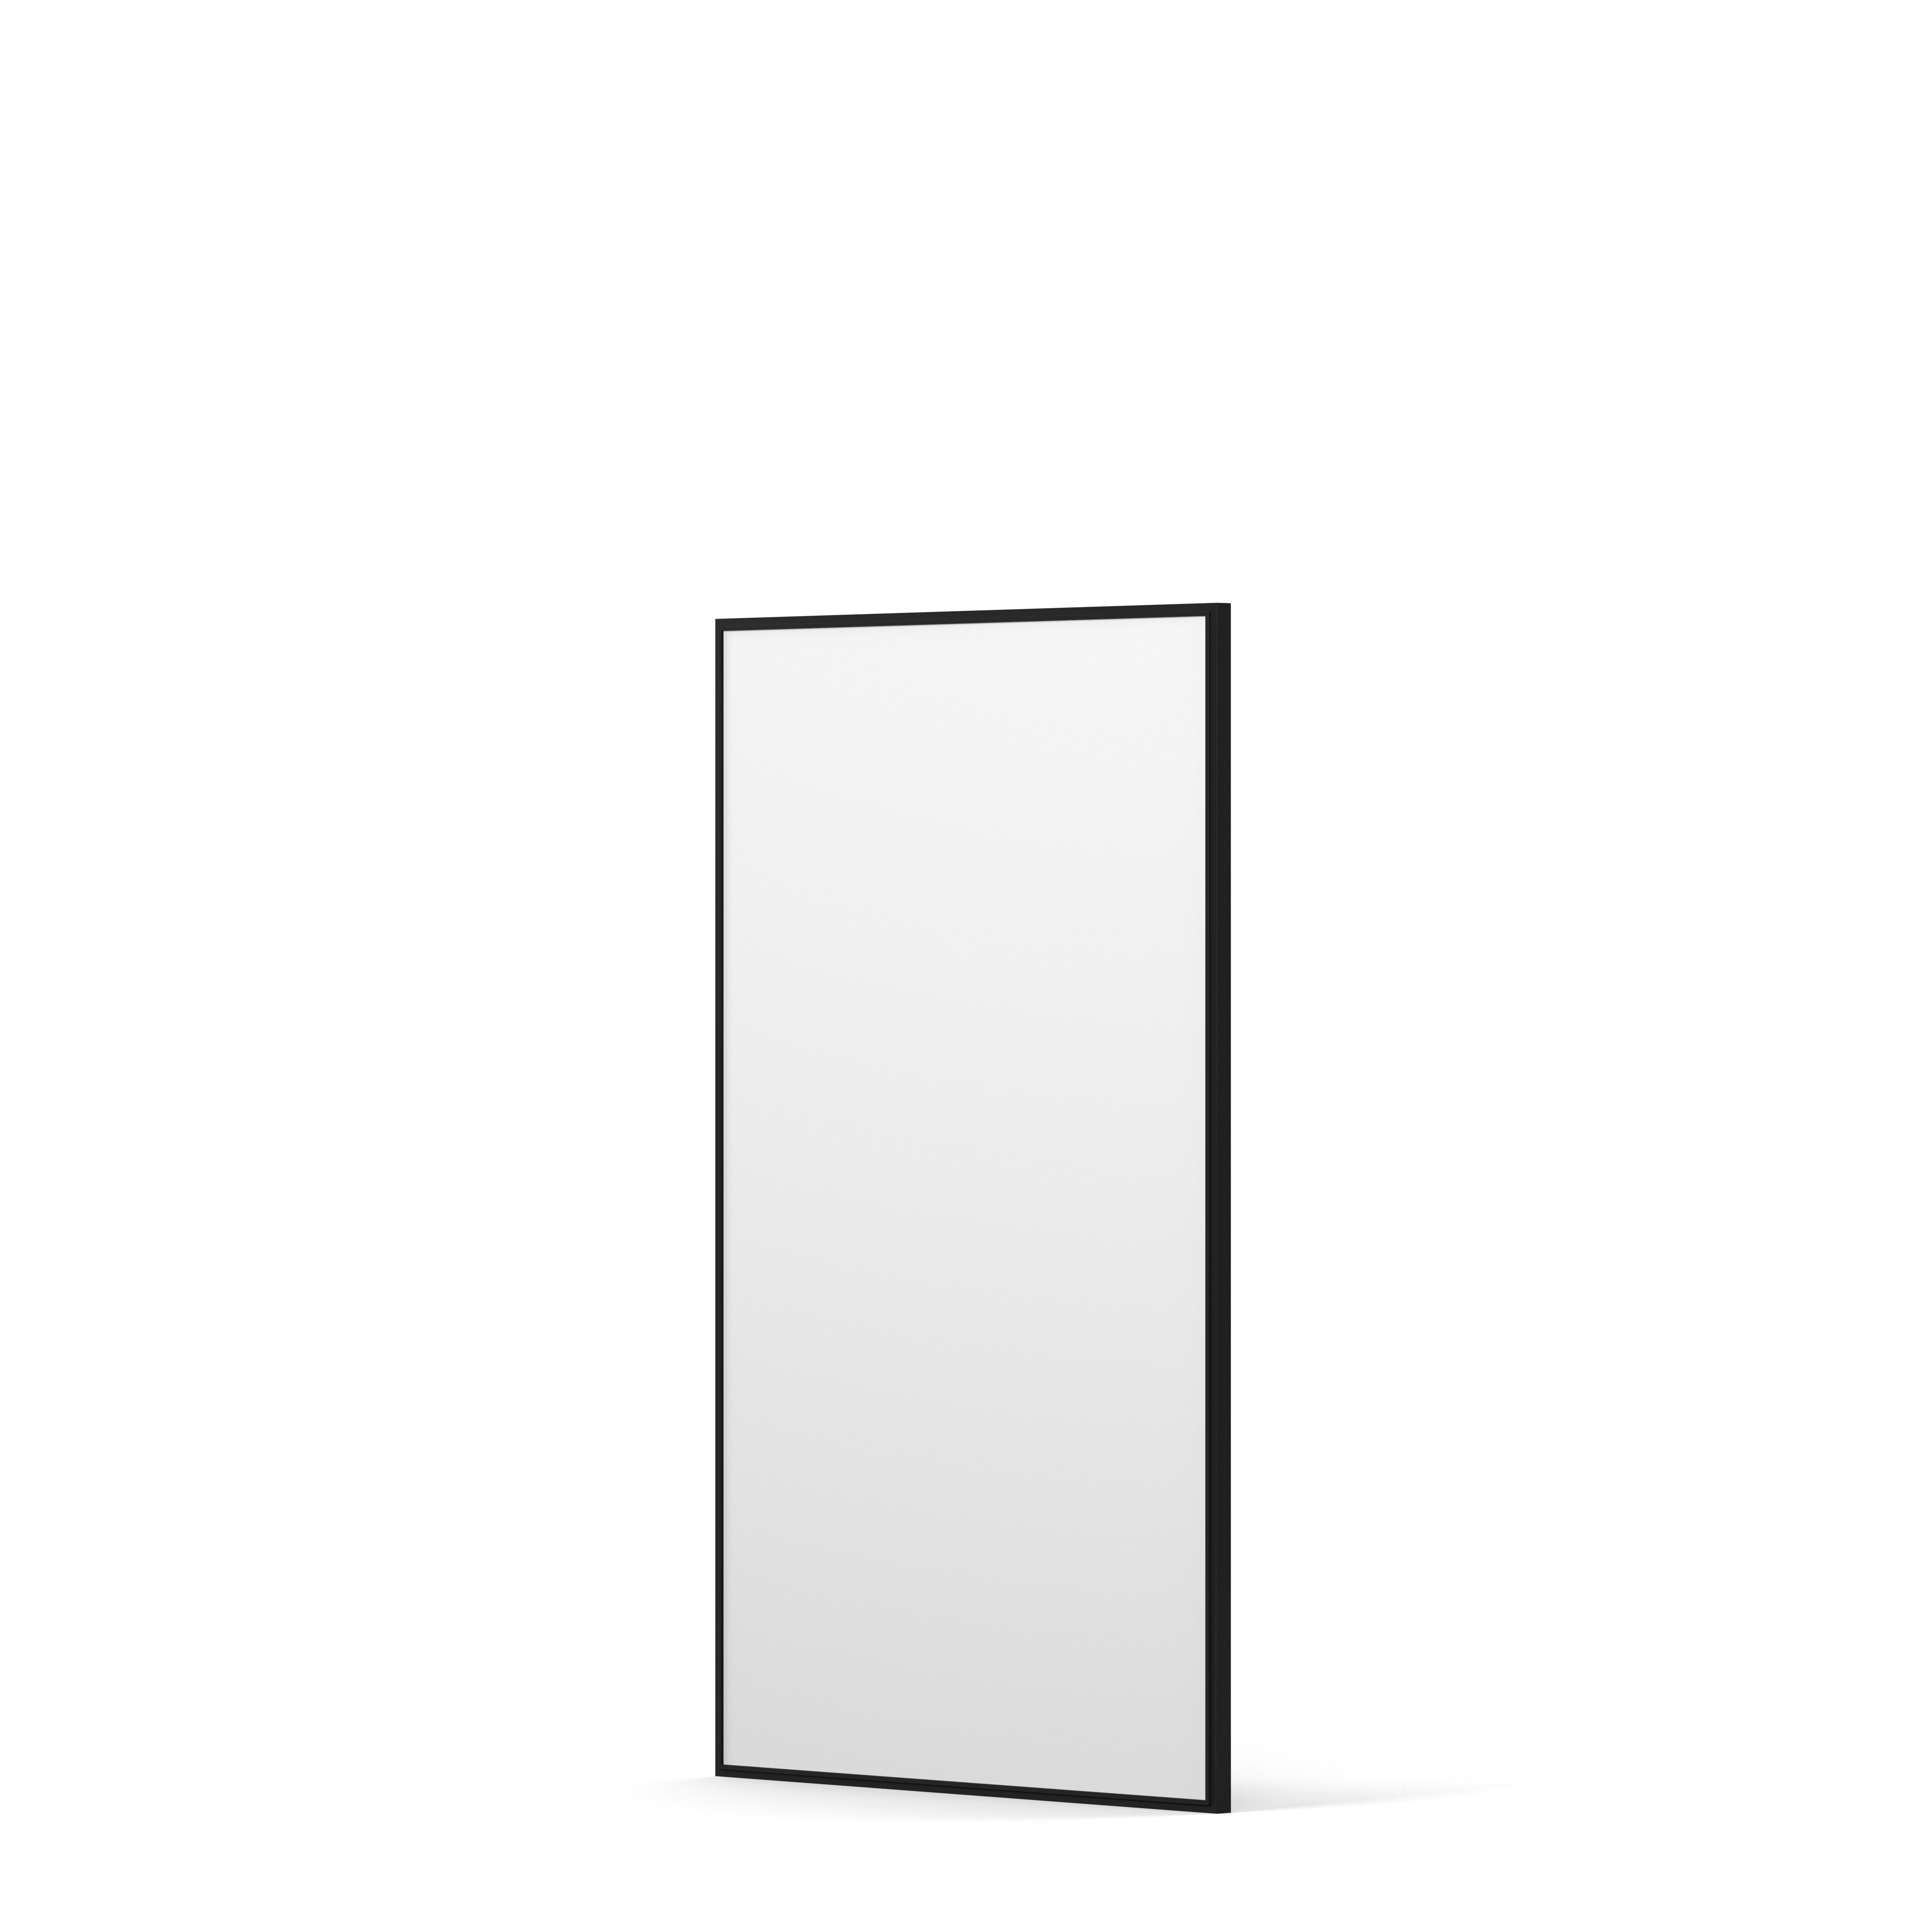 Englesson Cube Spegel Rektangulär #färg_Edge Black #Colour_Edge Black